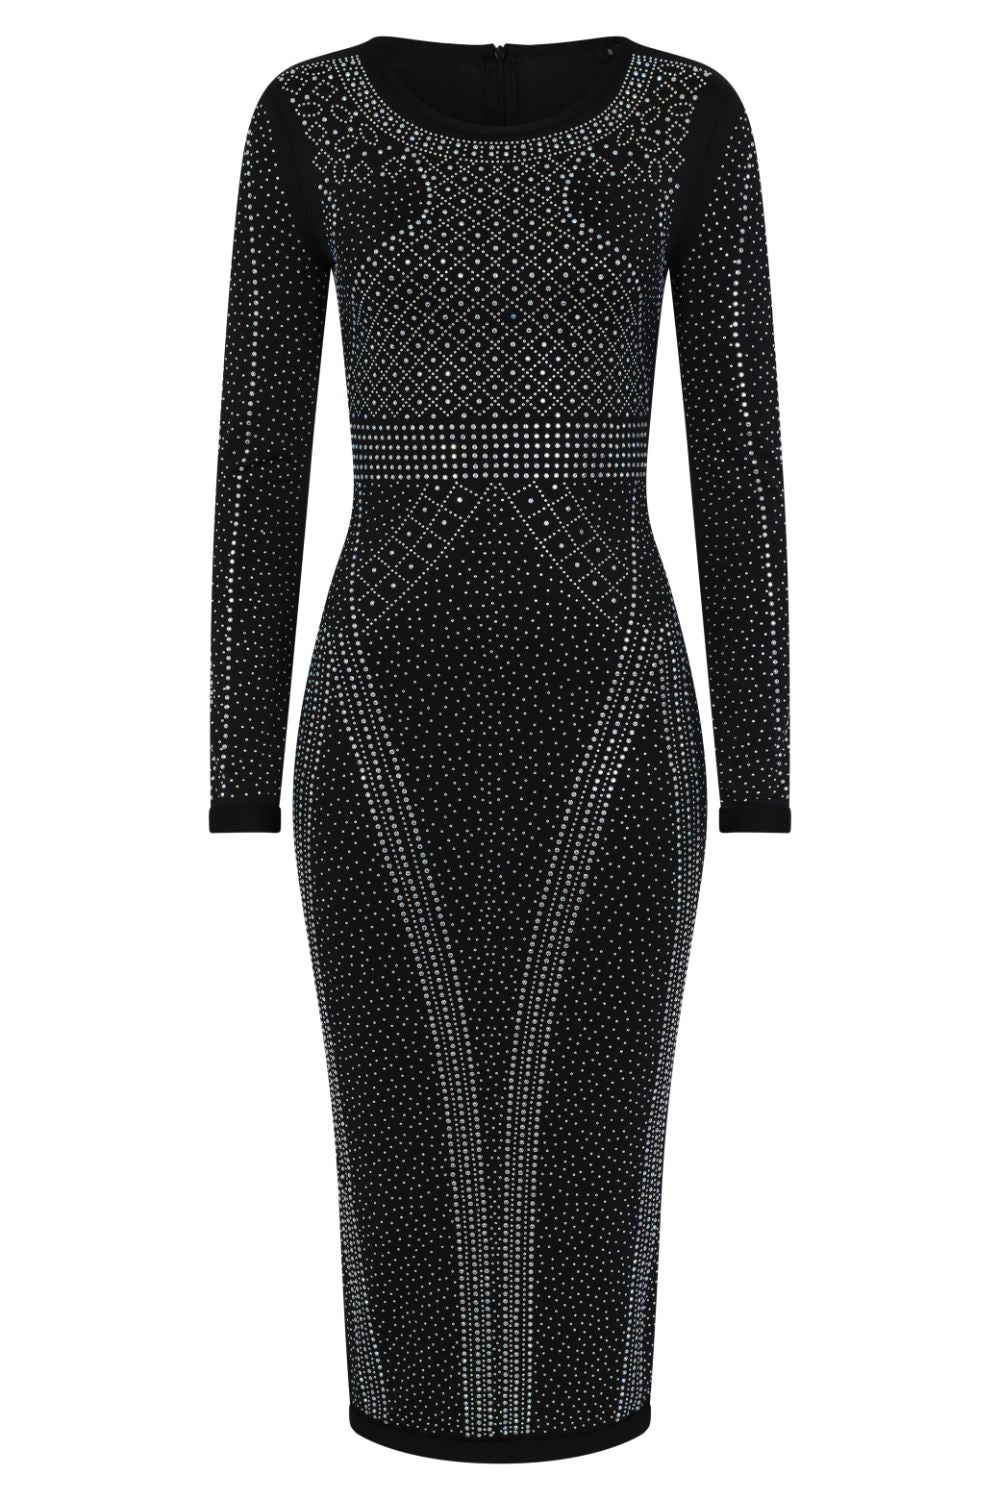 Luxor Black Caviar Crystal Rhinestone Bodycon Midi Dress